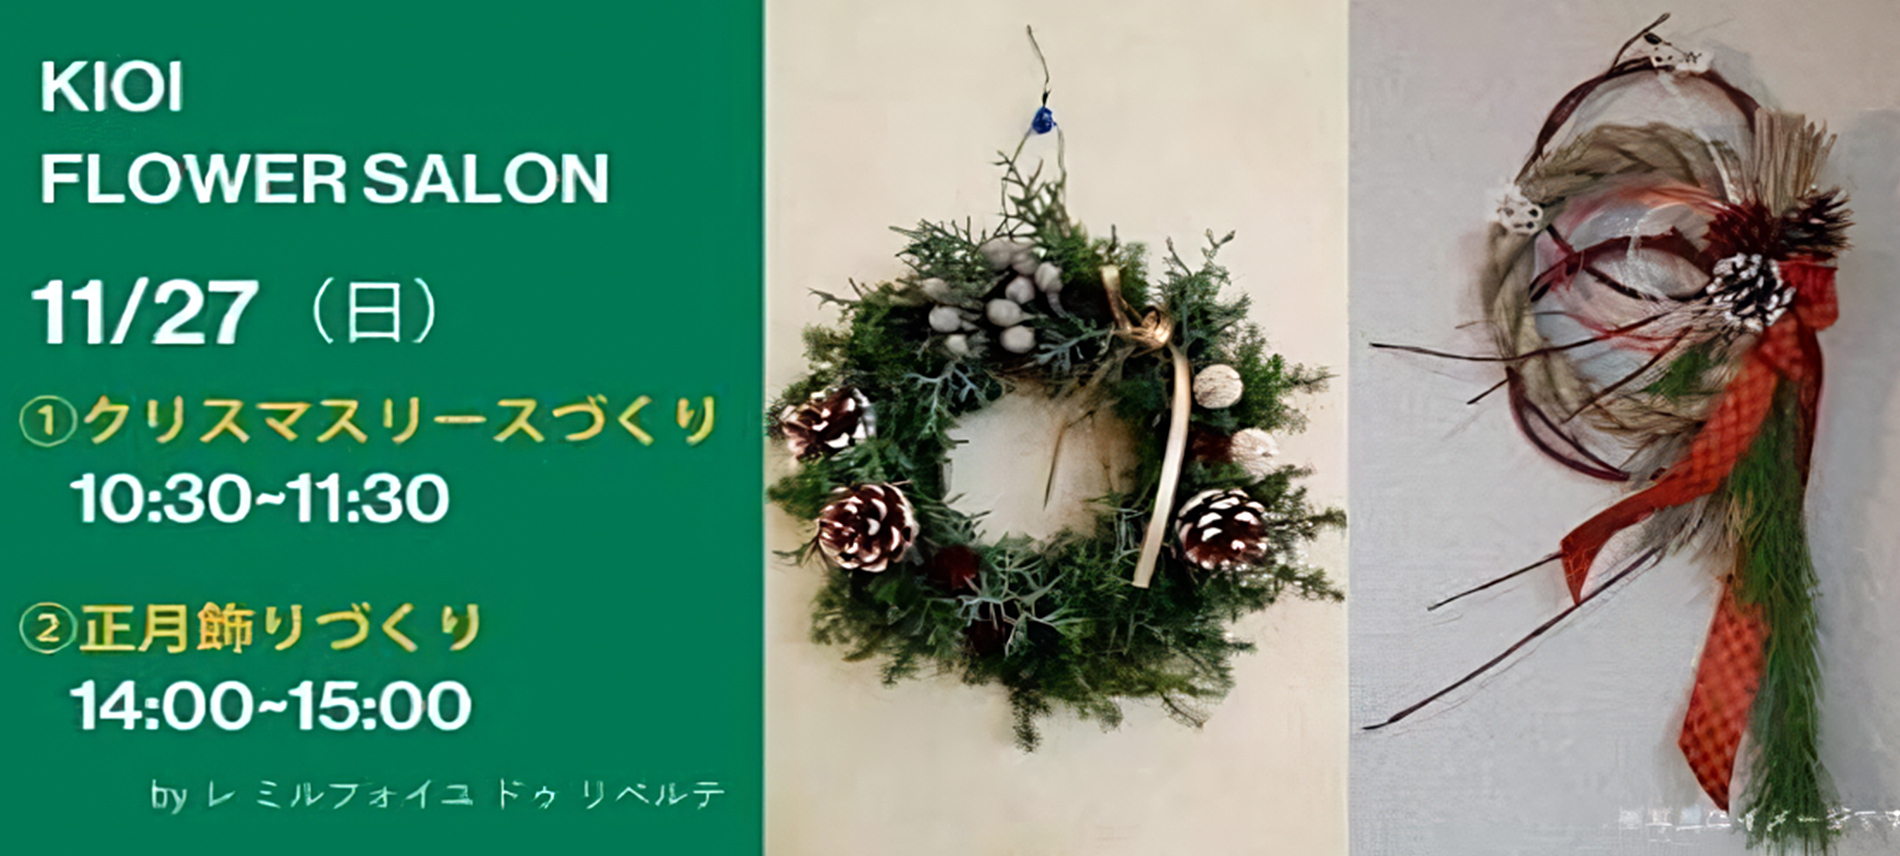 KIOI FLOWER SALON クリスマスリースと正月飾りづくり